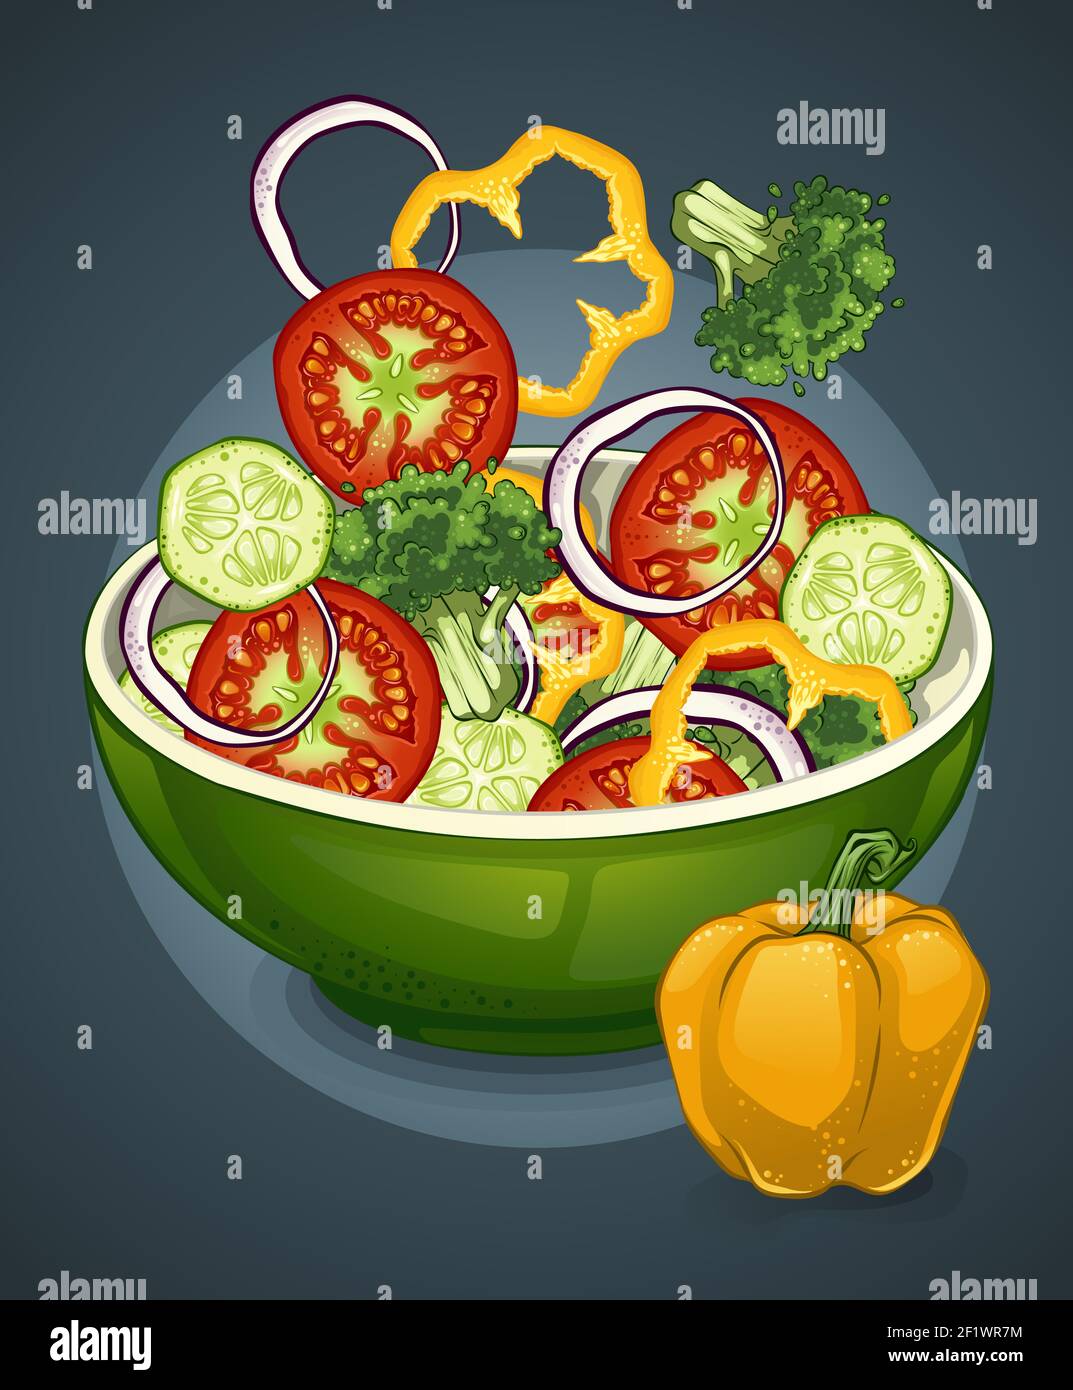 25900 Salad Drawings Illustrations RoyaltyFree Vector Graphics  Clip  Art  iStock